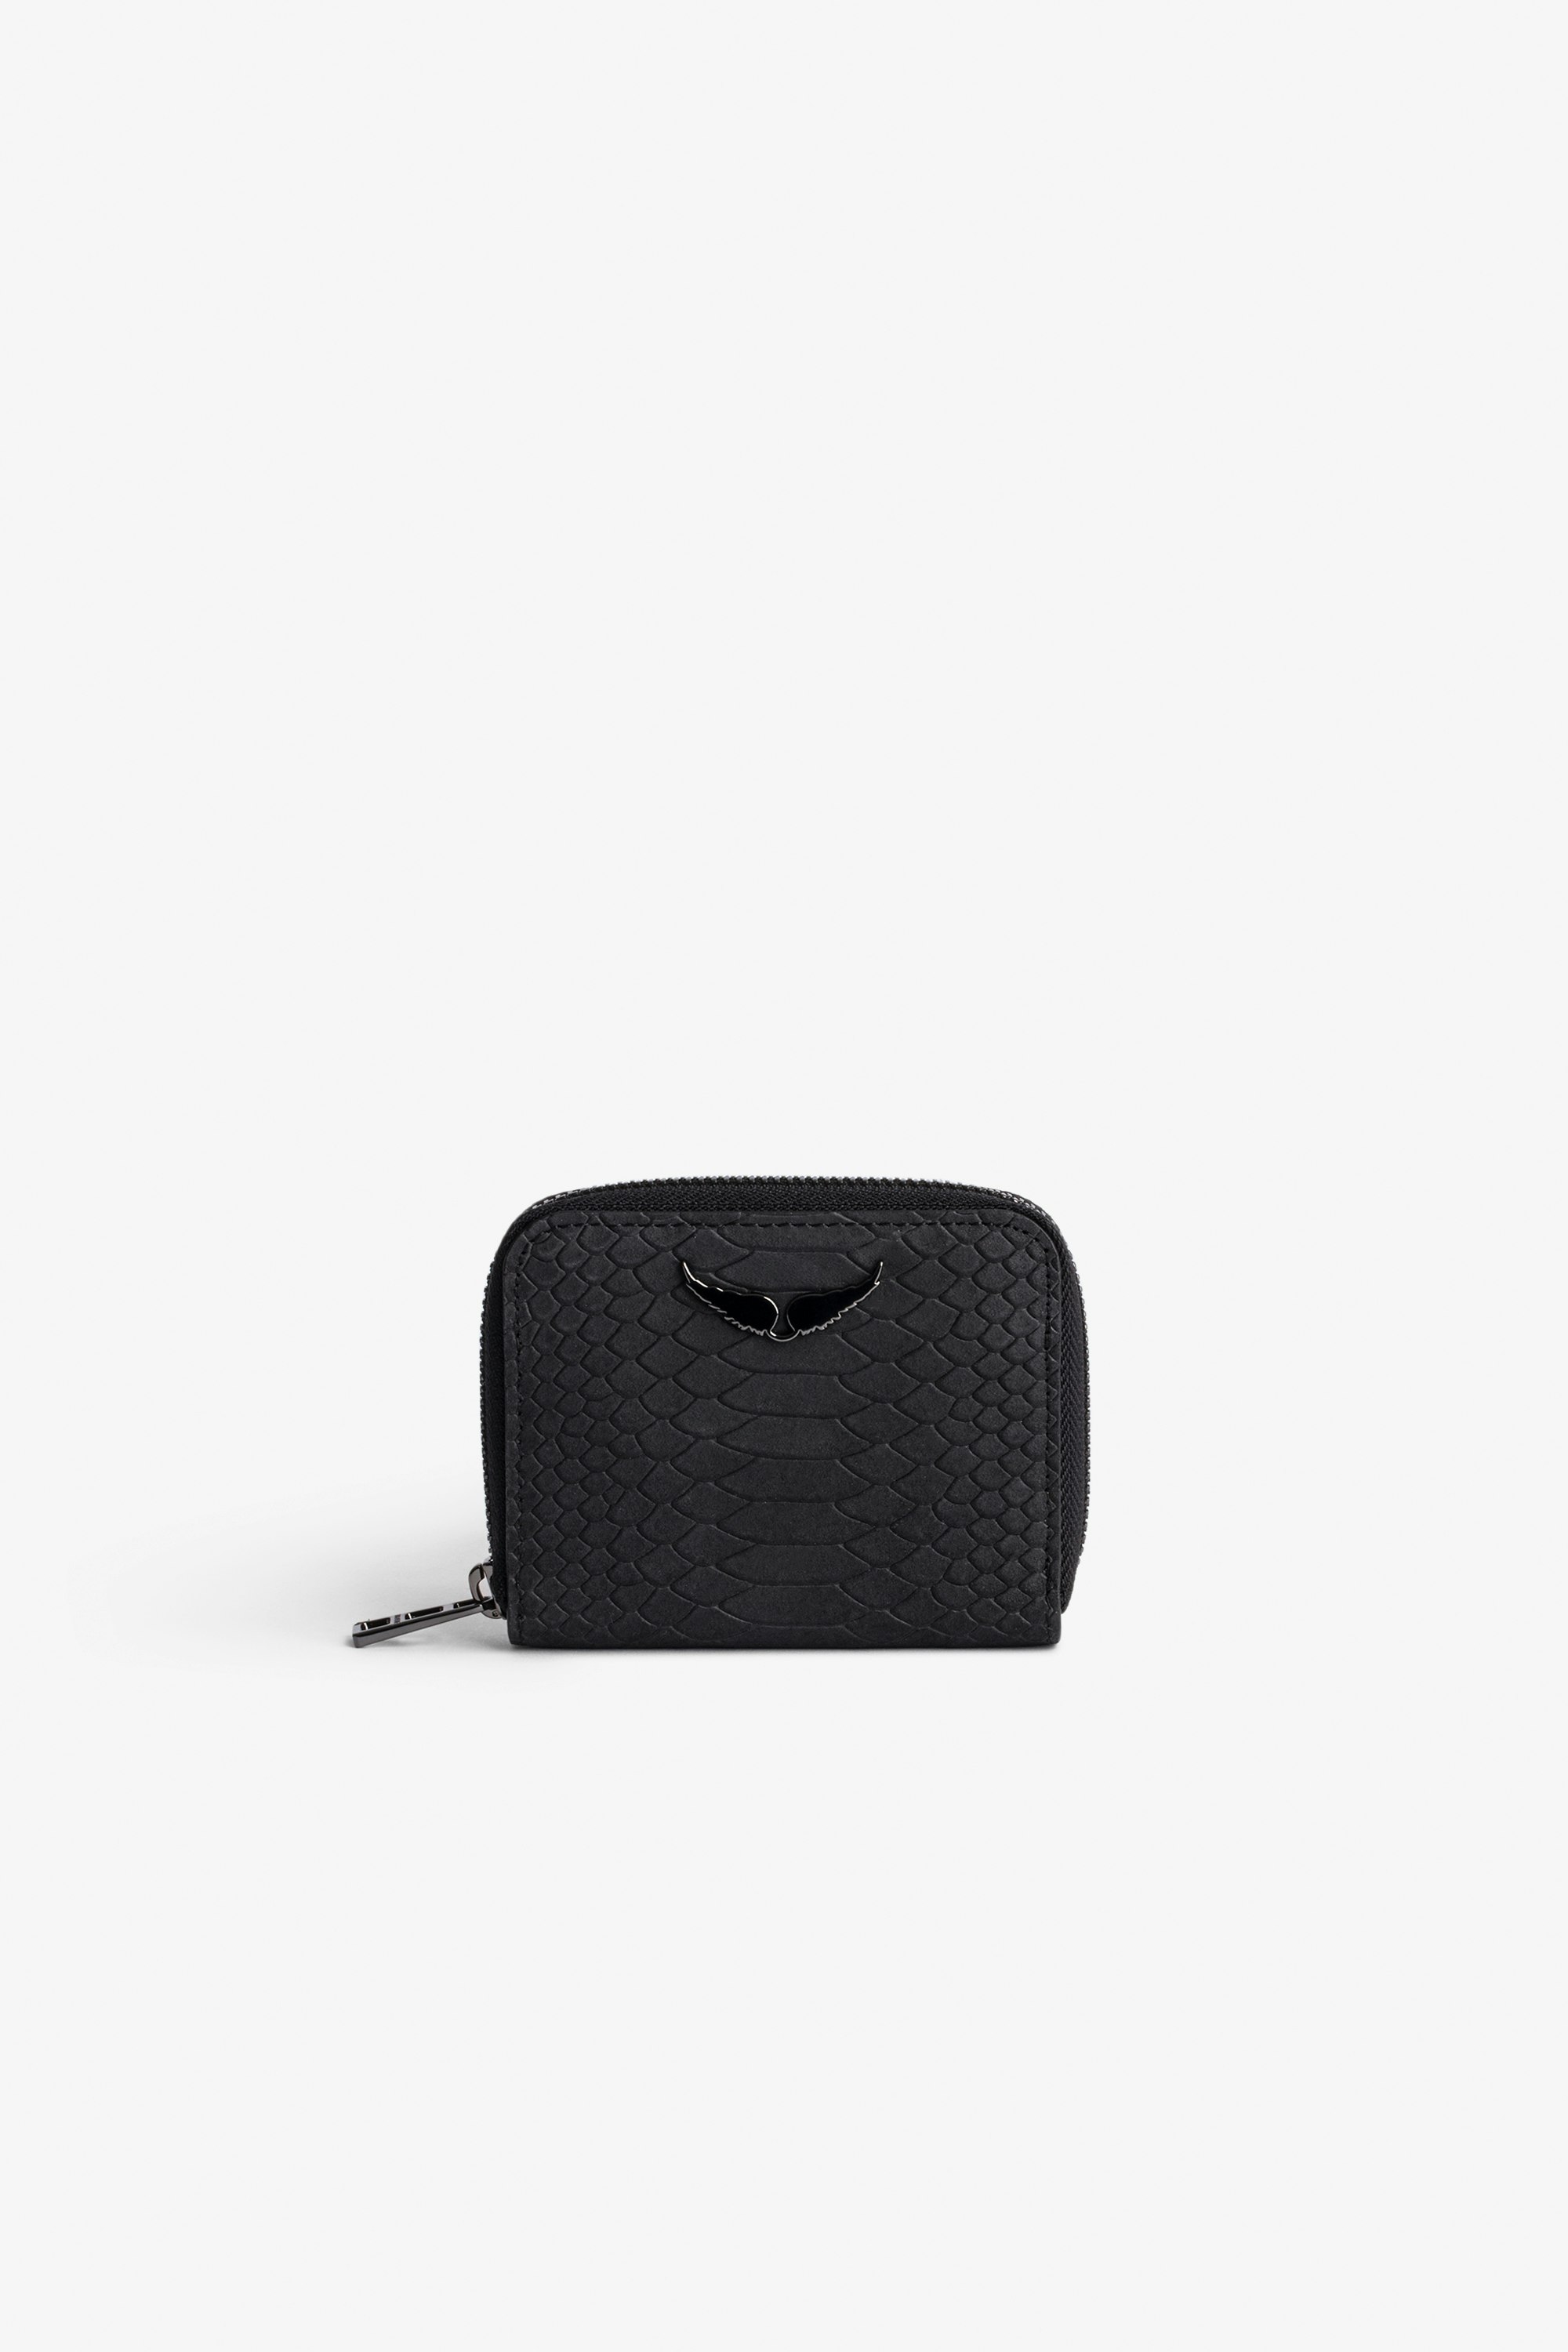 Mini ZV Soft Savage Wallet - Women's wallet in black python-effect leather